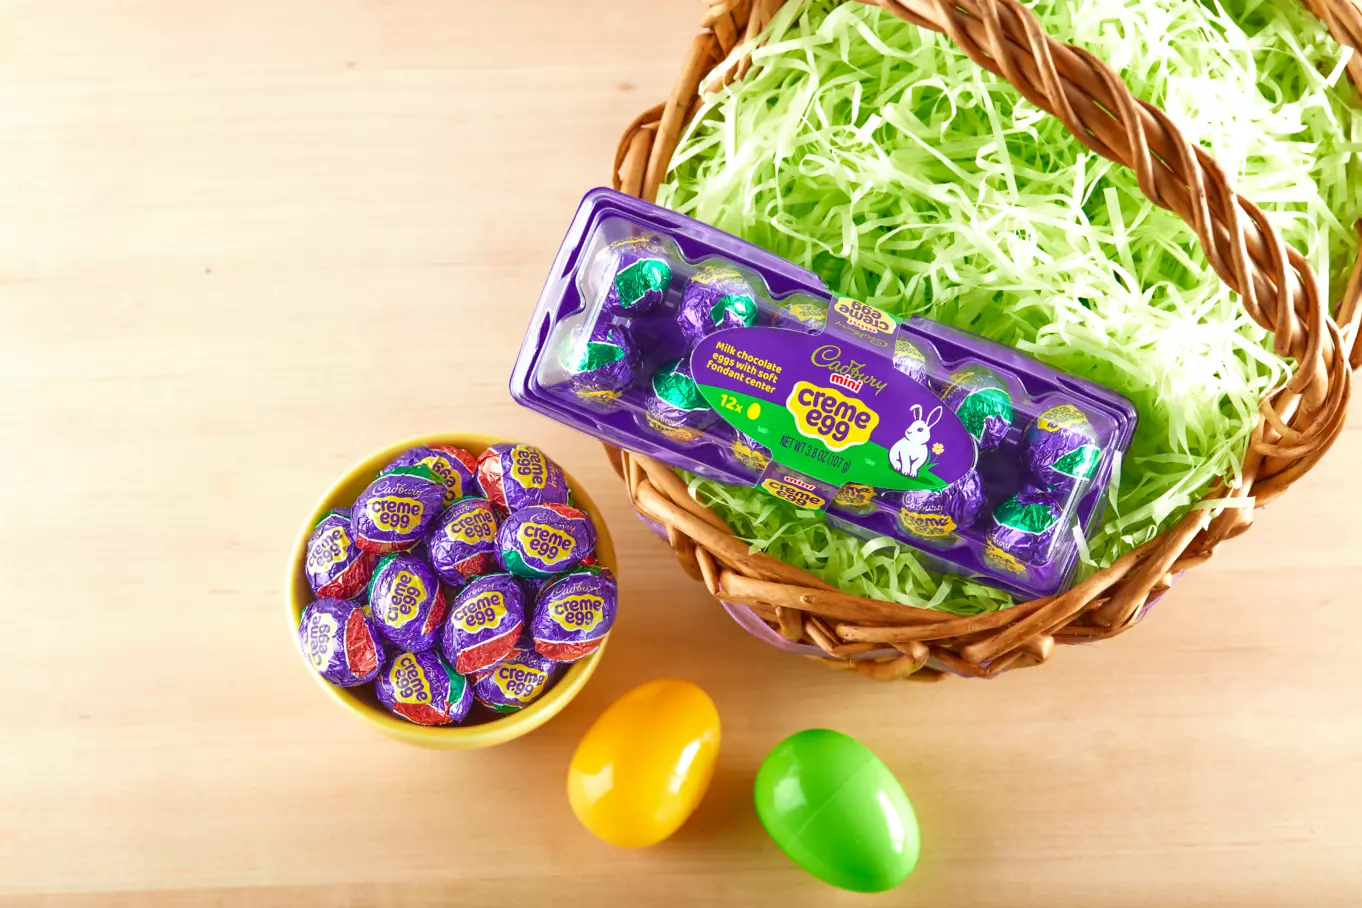 Cadbury Mini Creme Eggs inside Easter basket and bowl